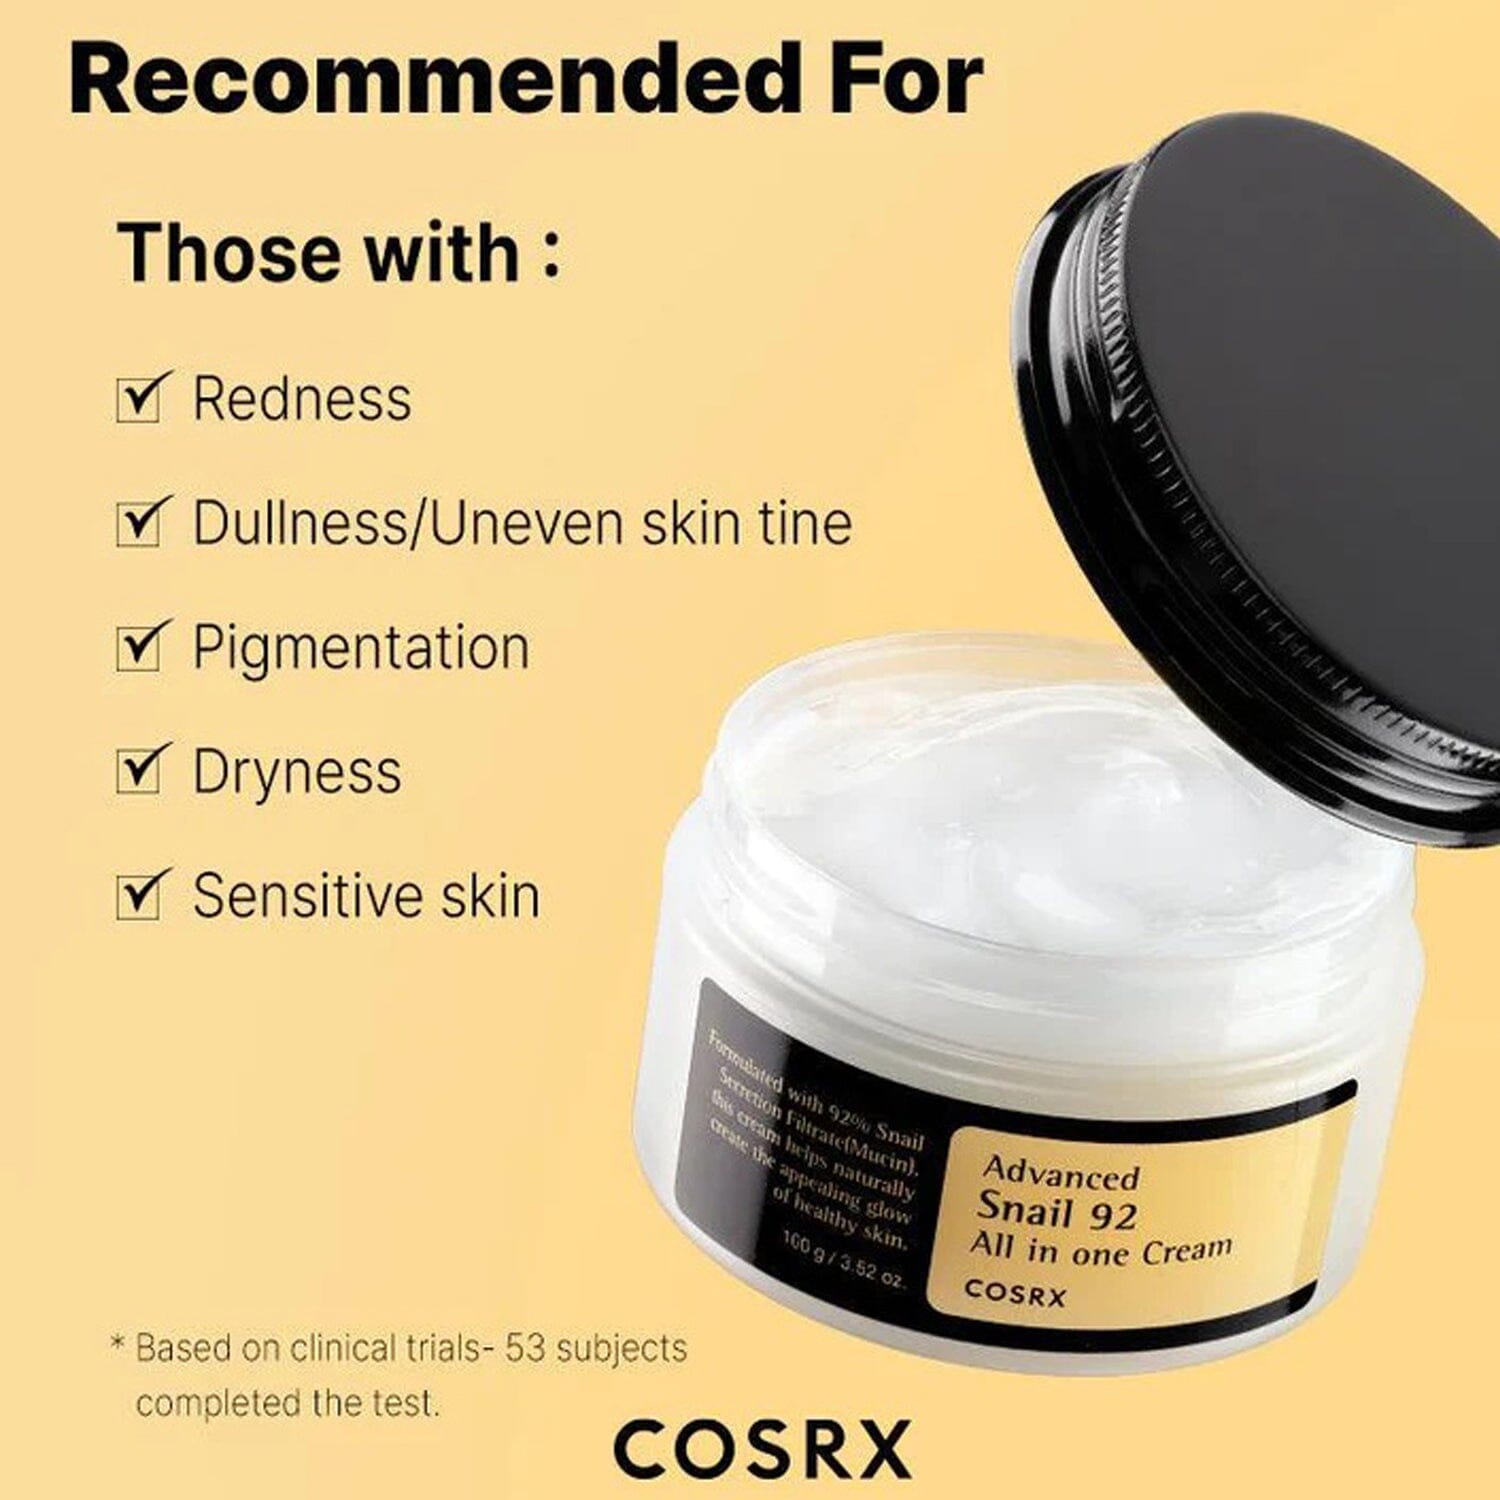 COSRX Advanced Snail 92 All in one Cream 50g (Tube) Skin Care COSRX ORION XO Sri Lanka